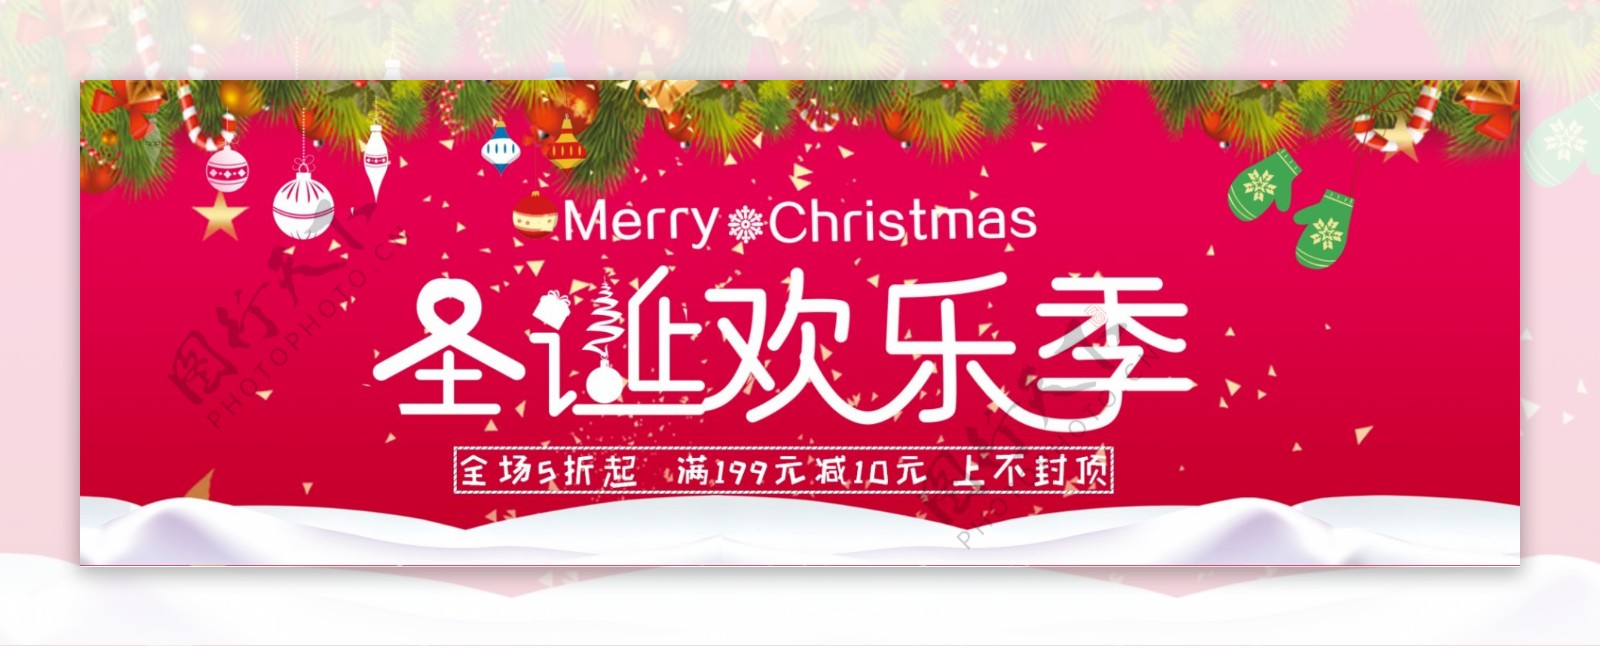 红色圣诞节狂欢促销海报banner